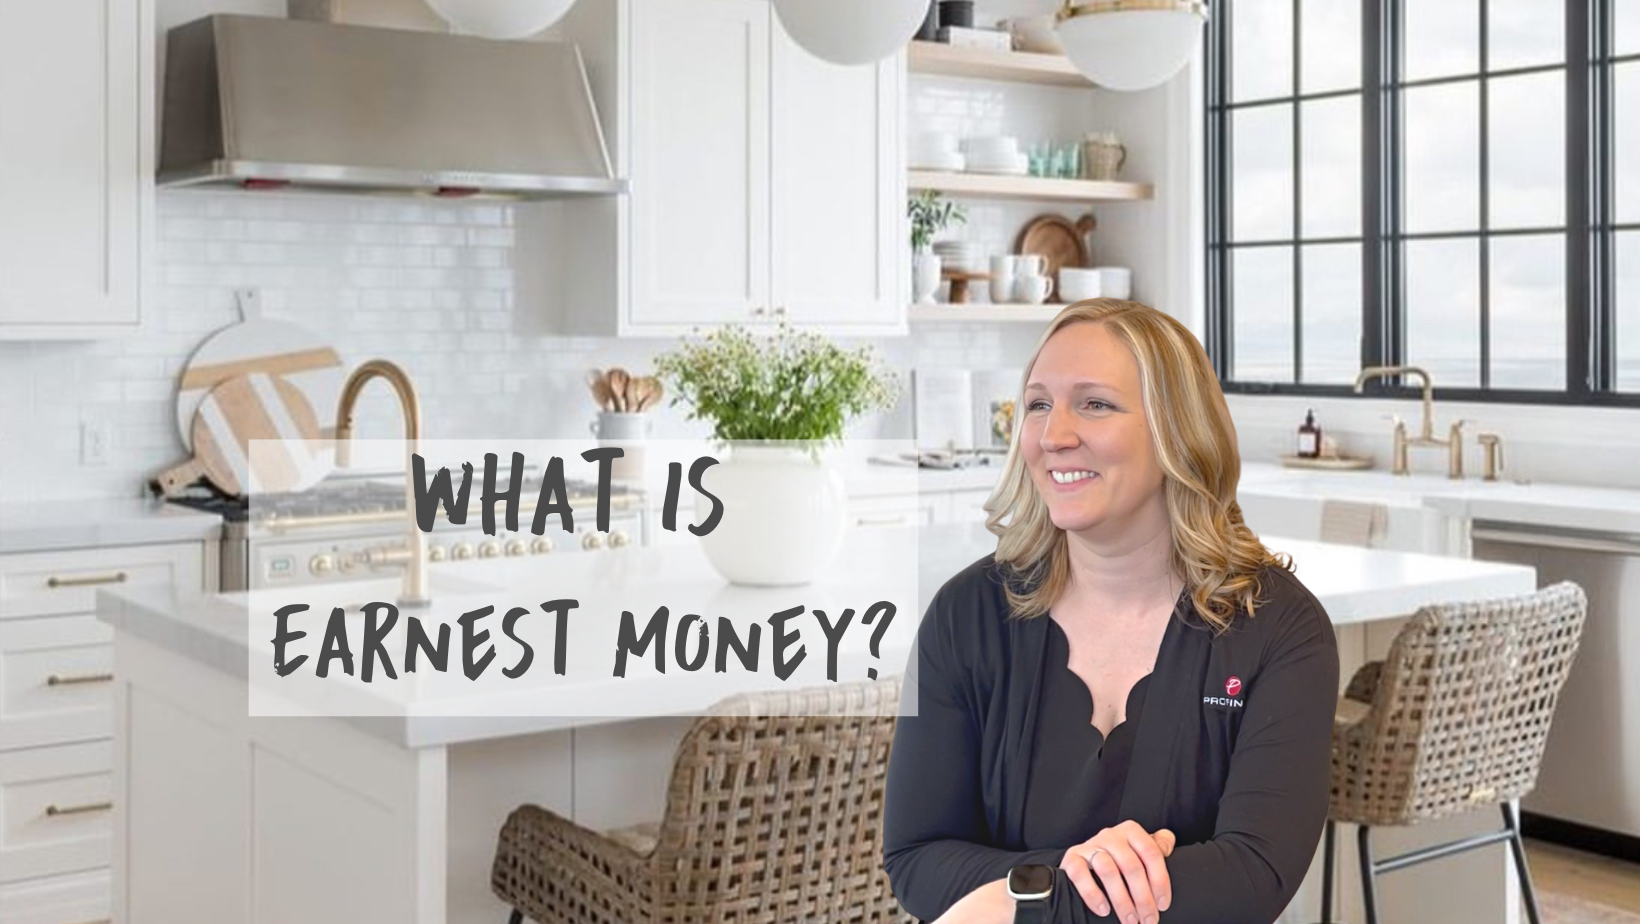 Video tutorial with Erica explaining earnest money